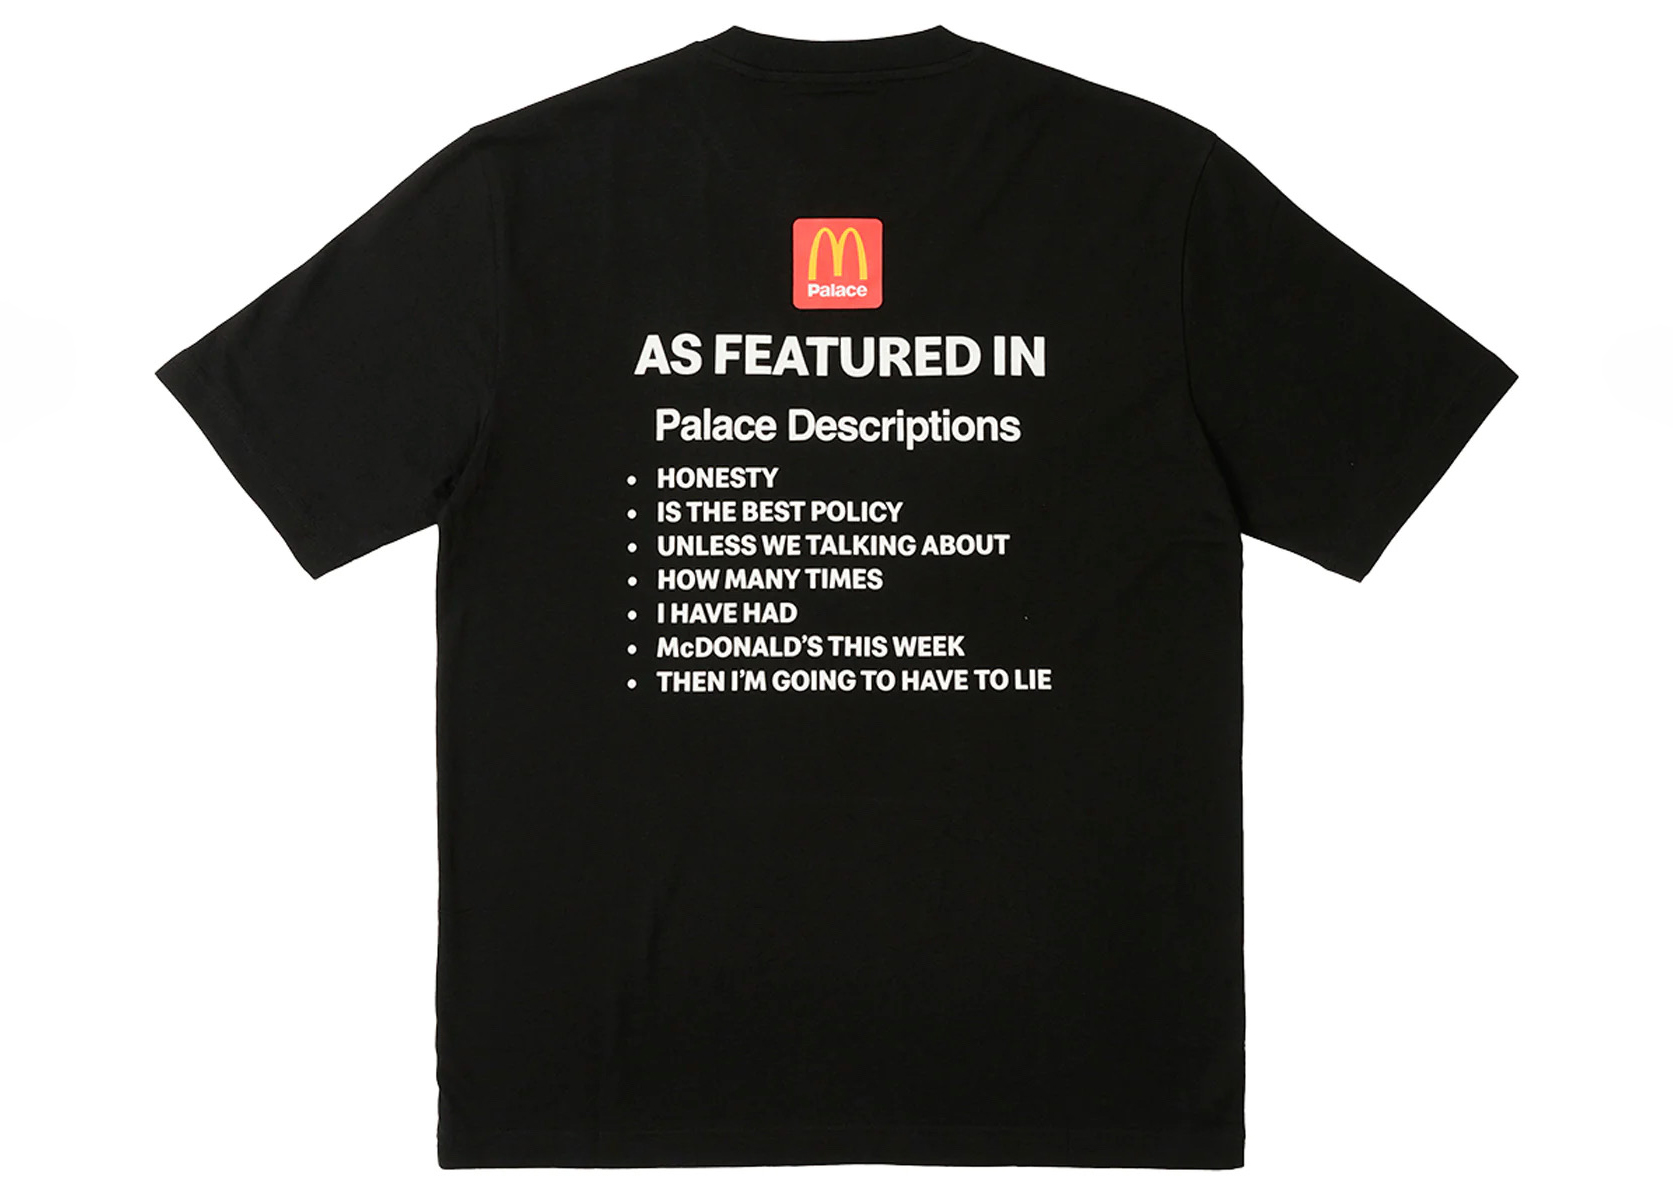 Palace x McDonald's Description I T-shirt Black